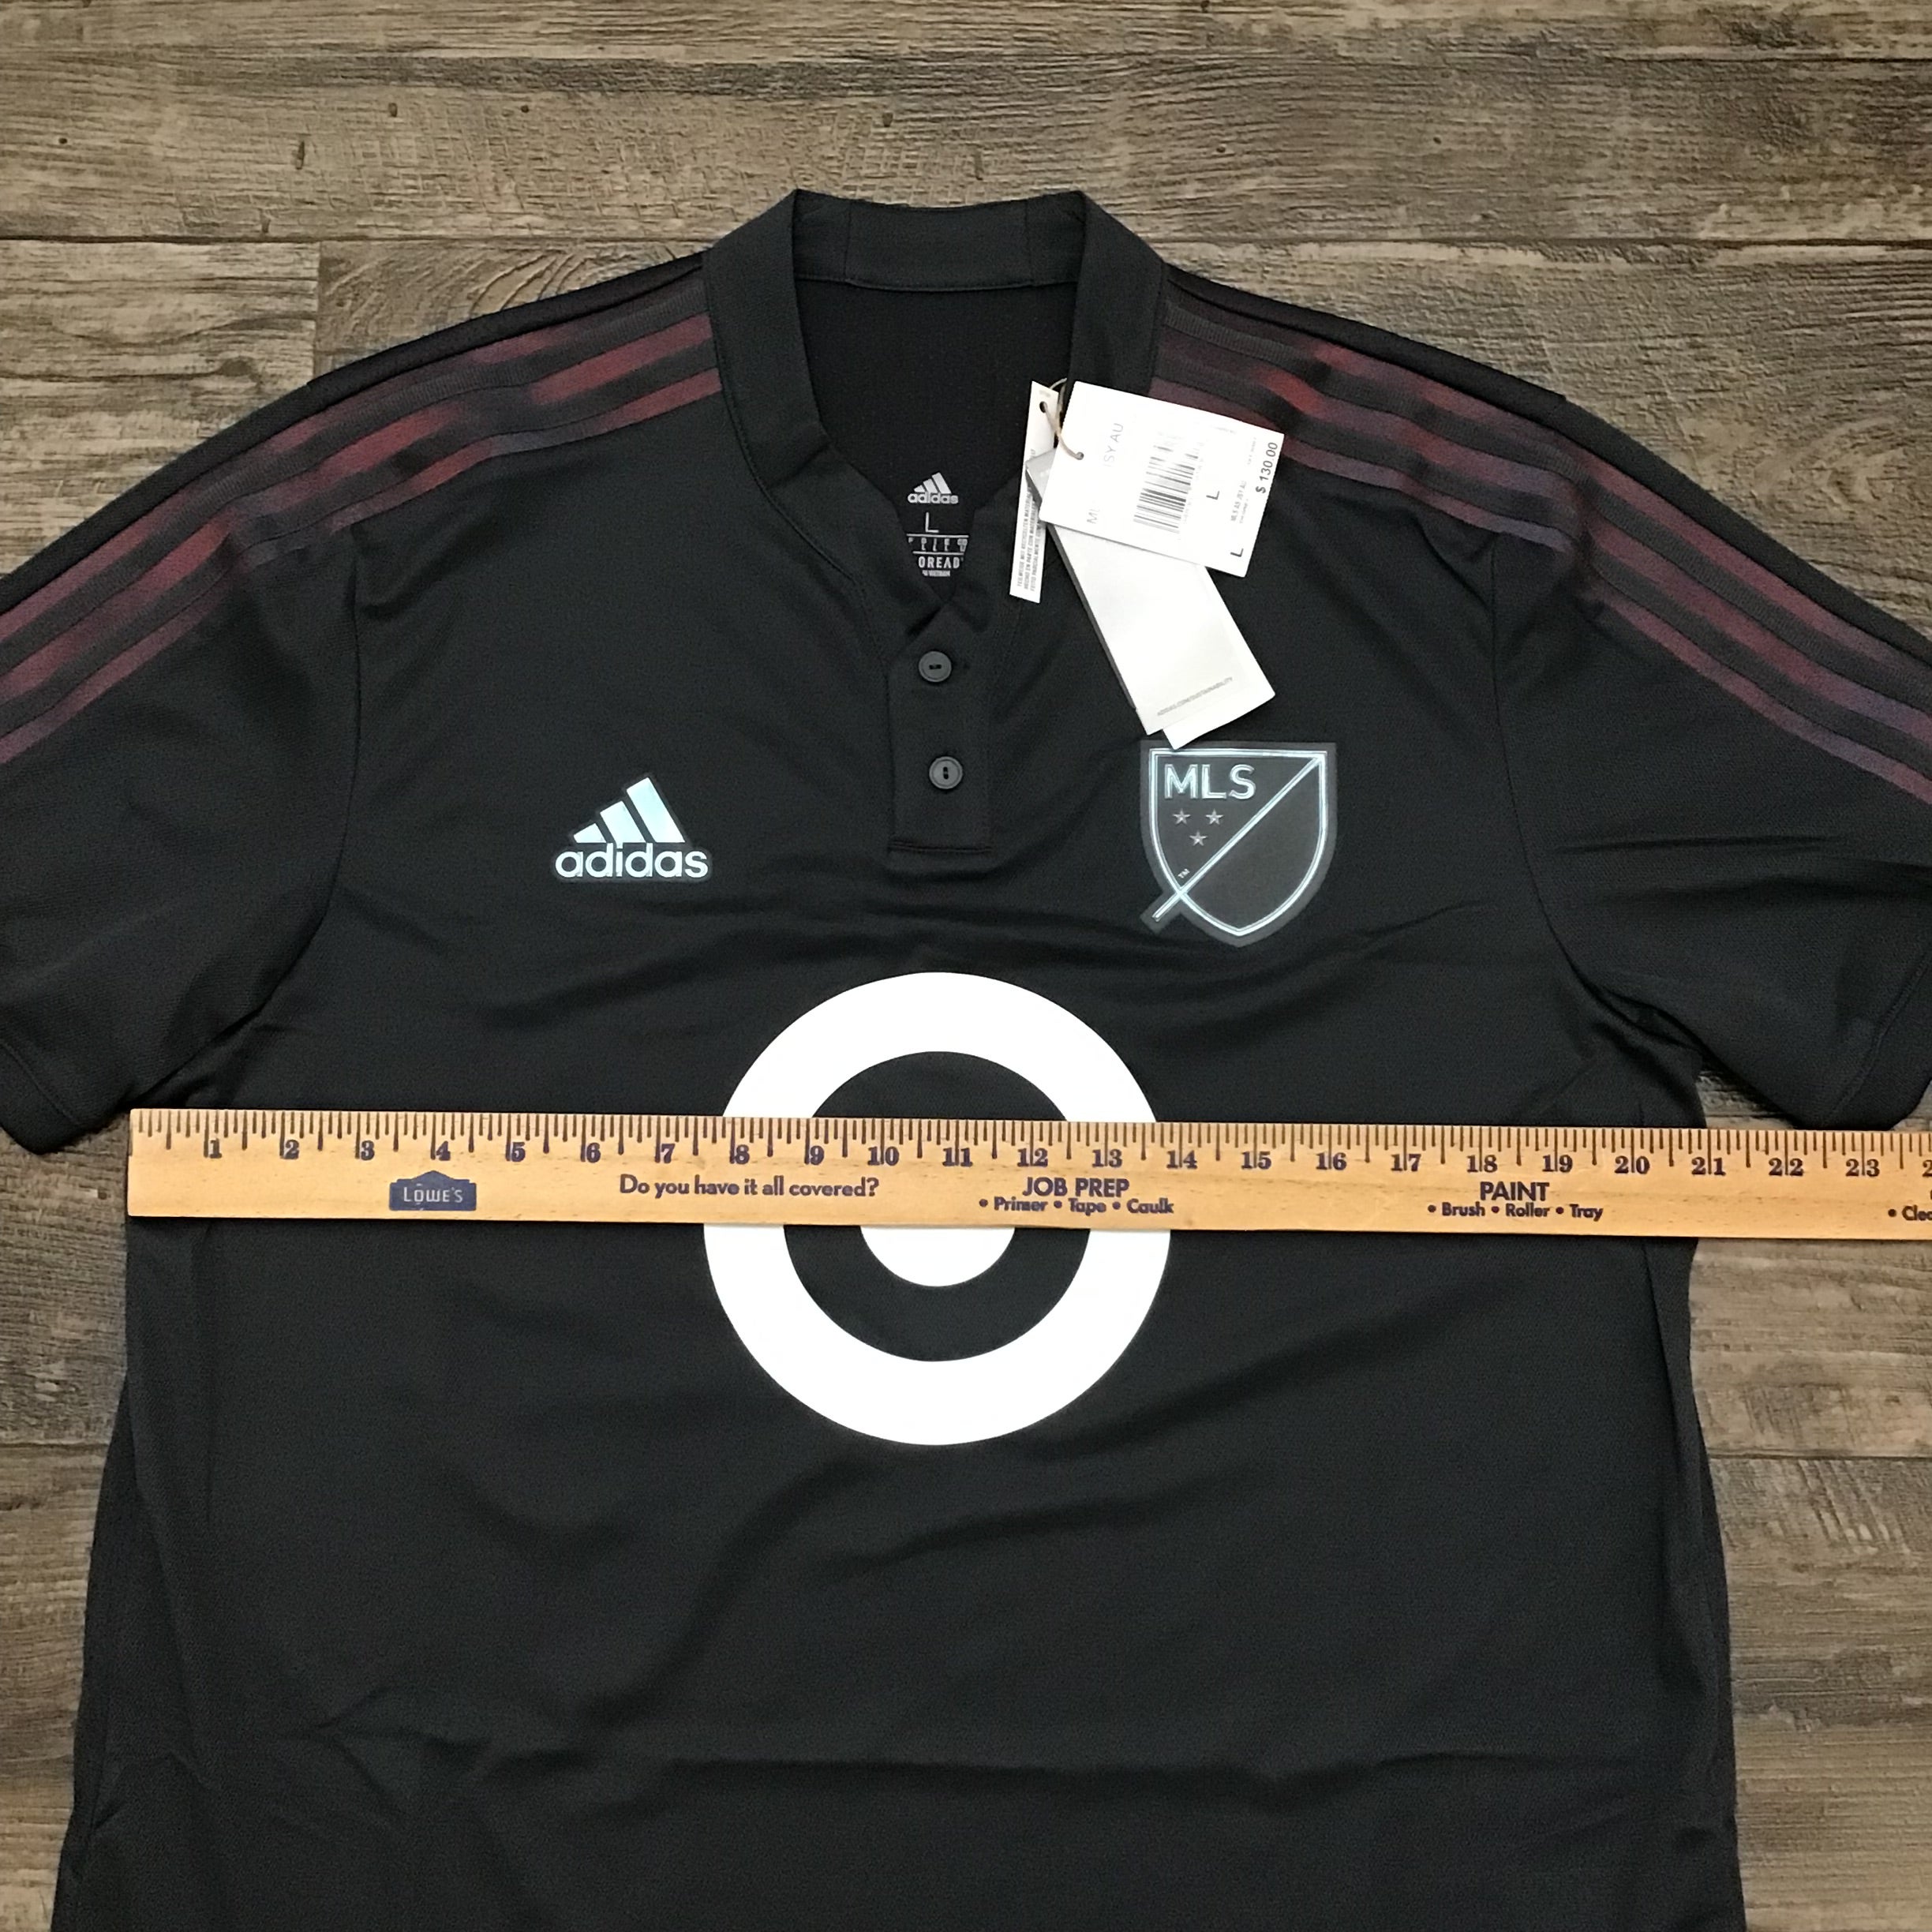 New 2022 adidas MLS All Star Jersey Size XL Minnesota Major League